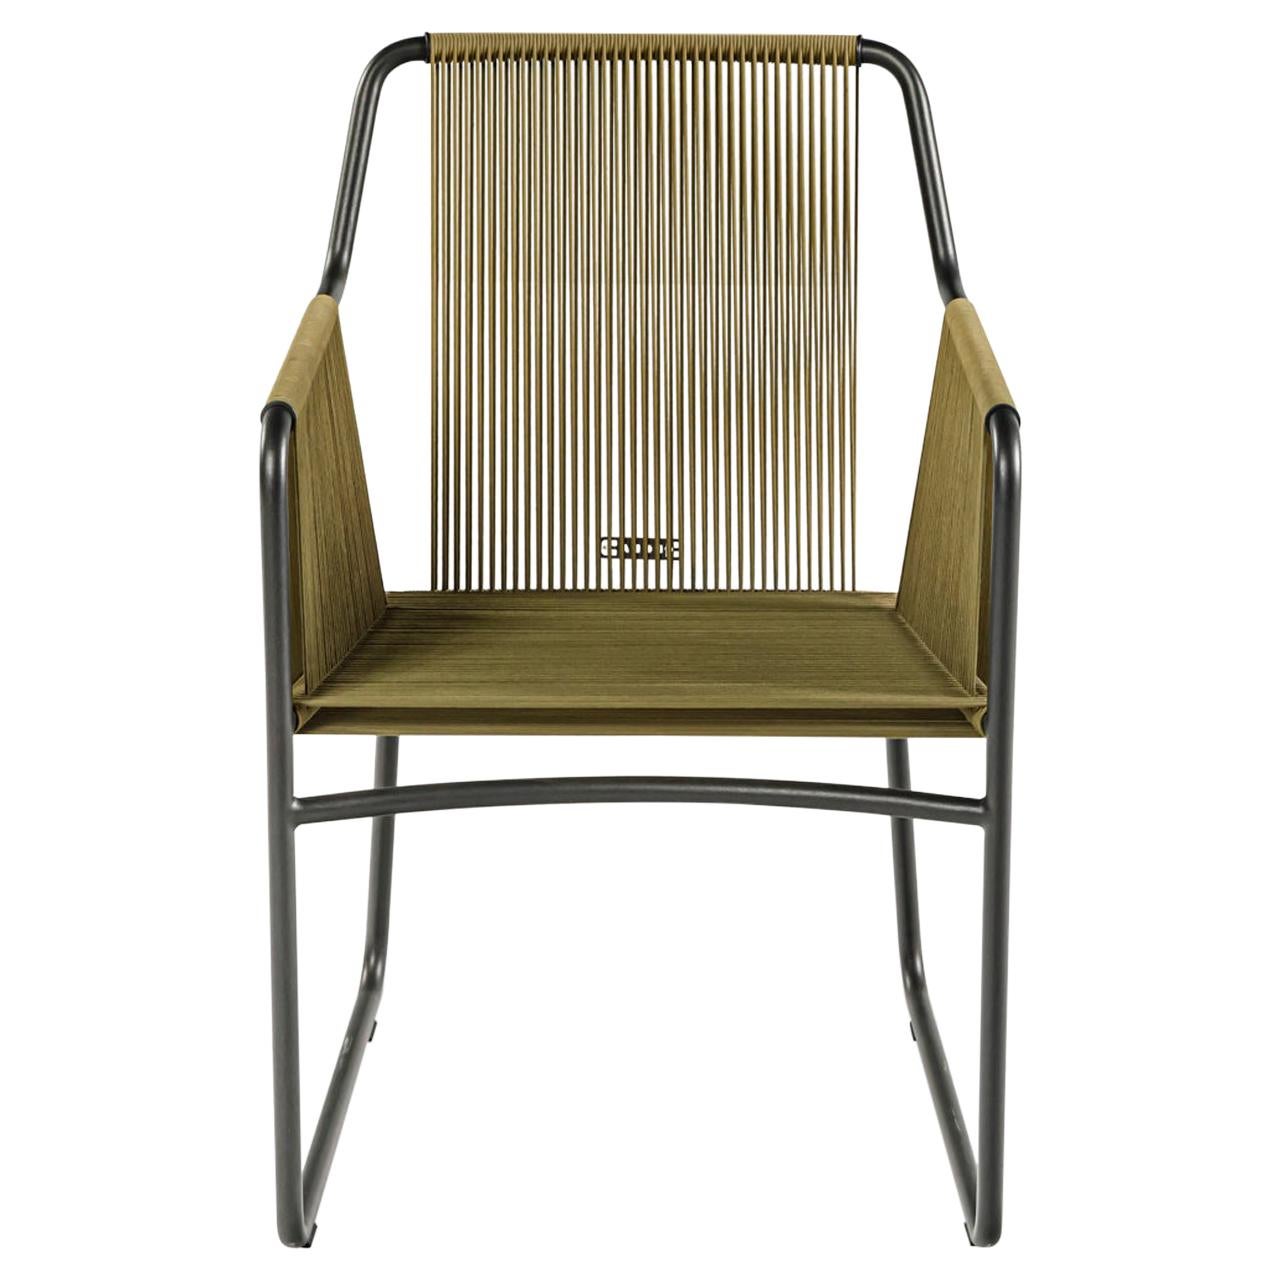 Harp Chair in Olive Green by Rodolfo Dordoni